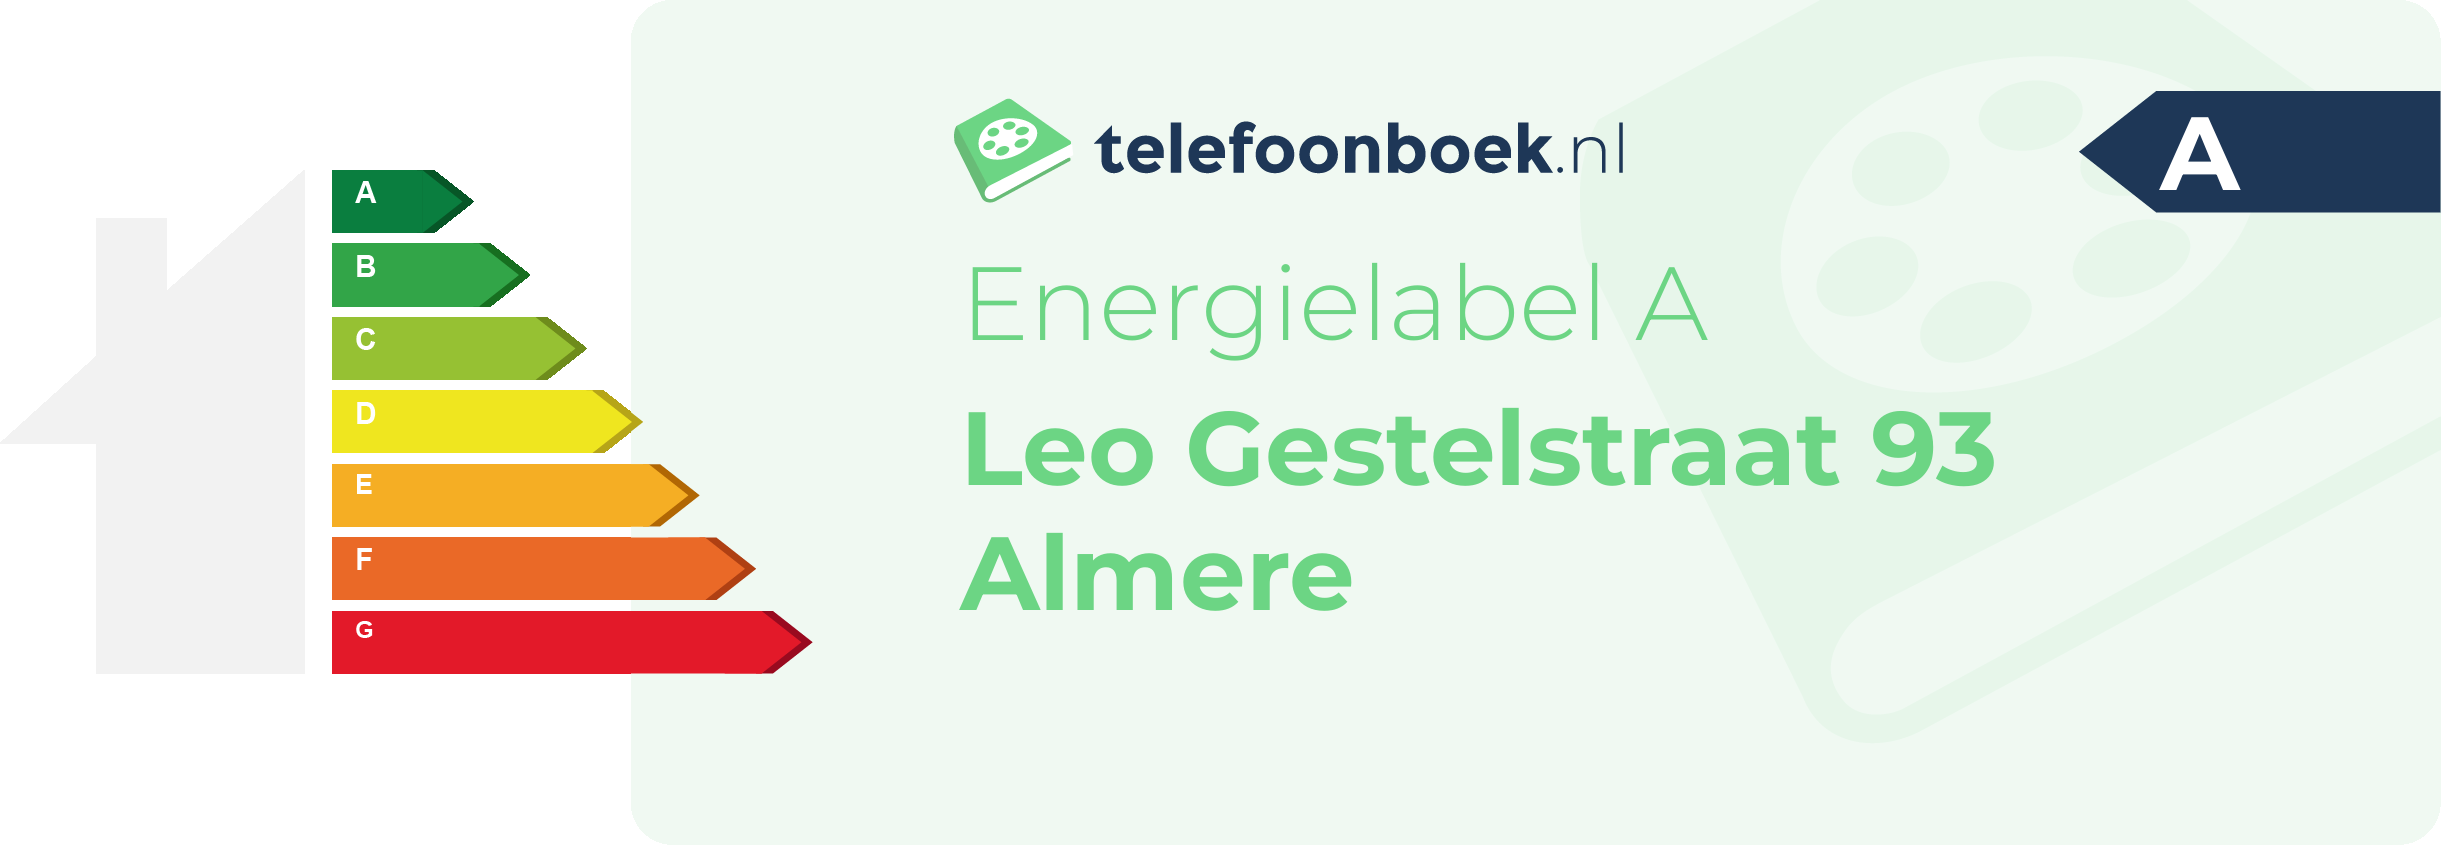 Energielabel Leo Gestelstraat 93 Almere